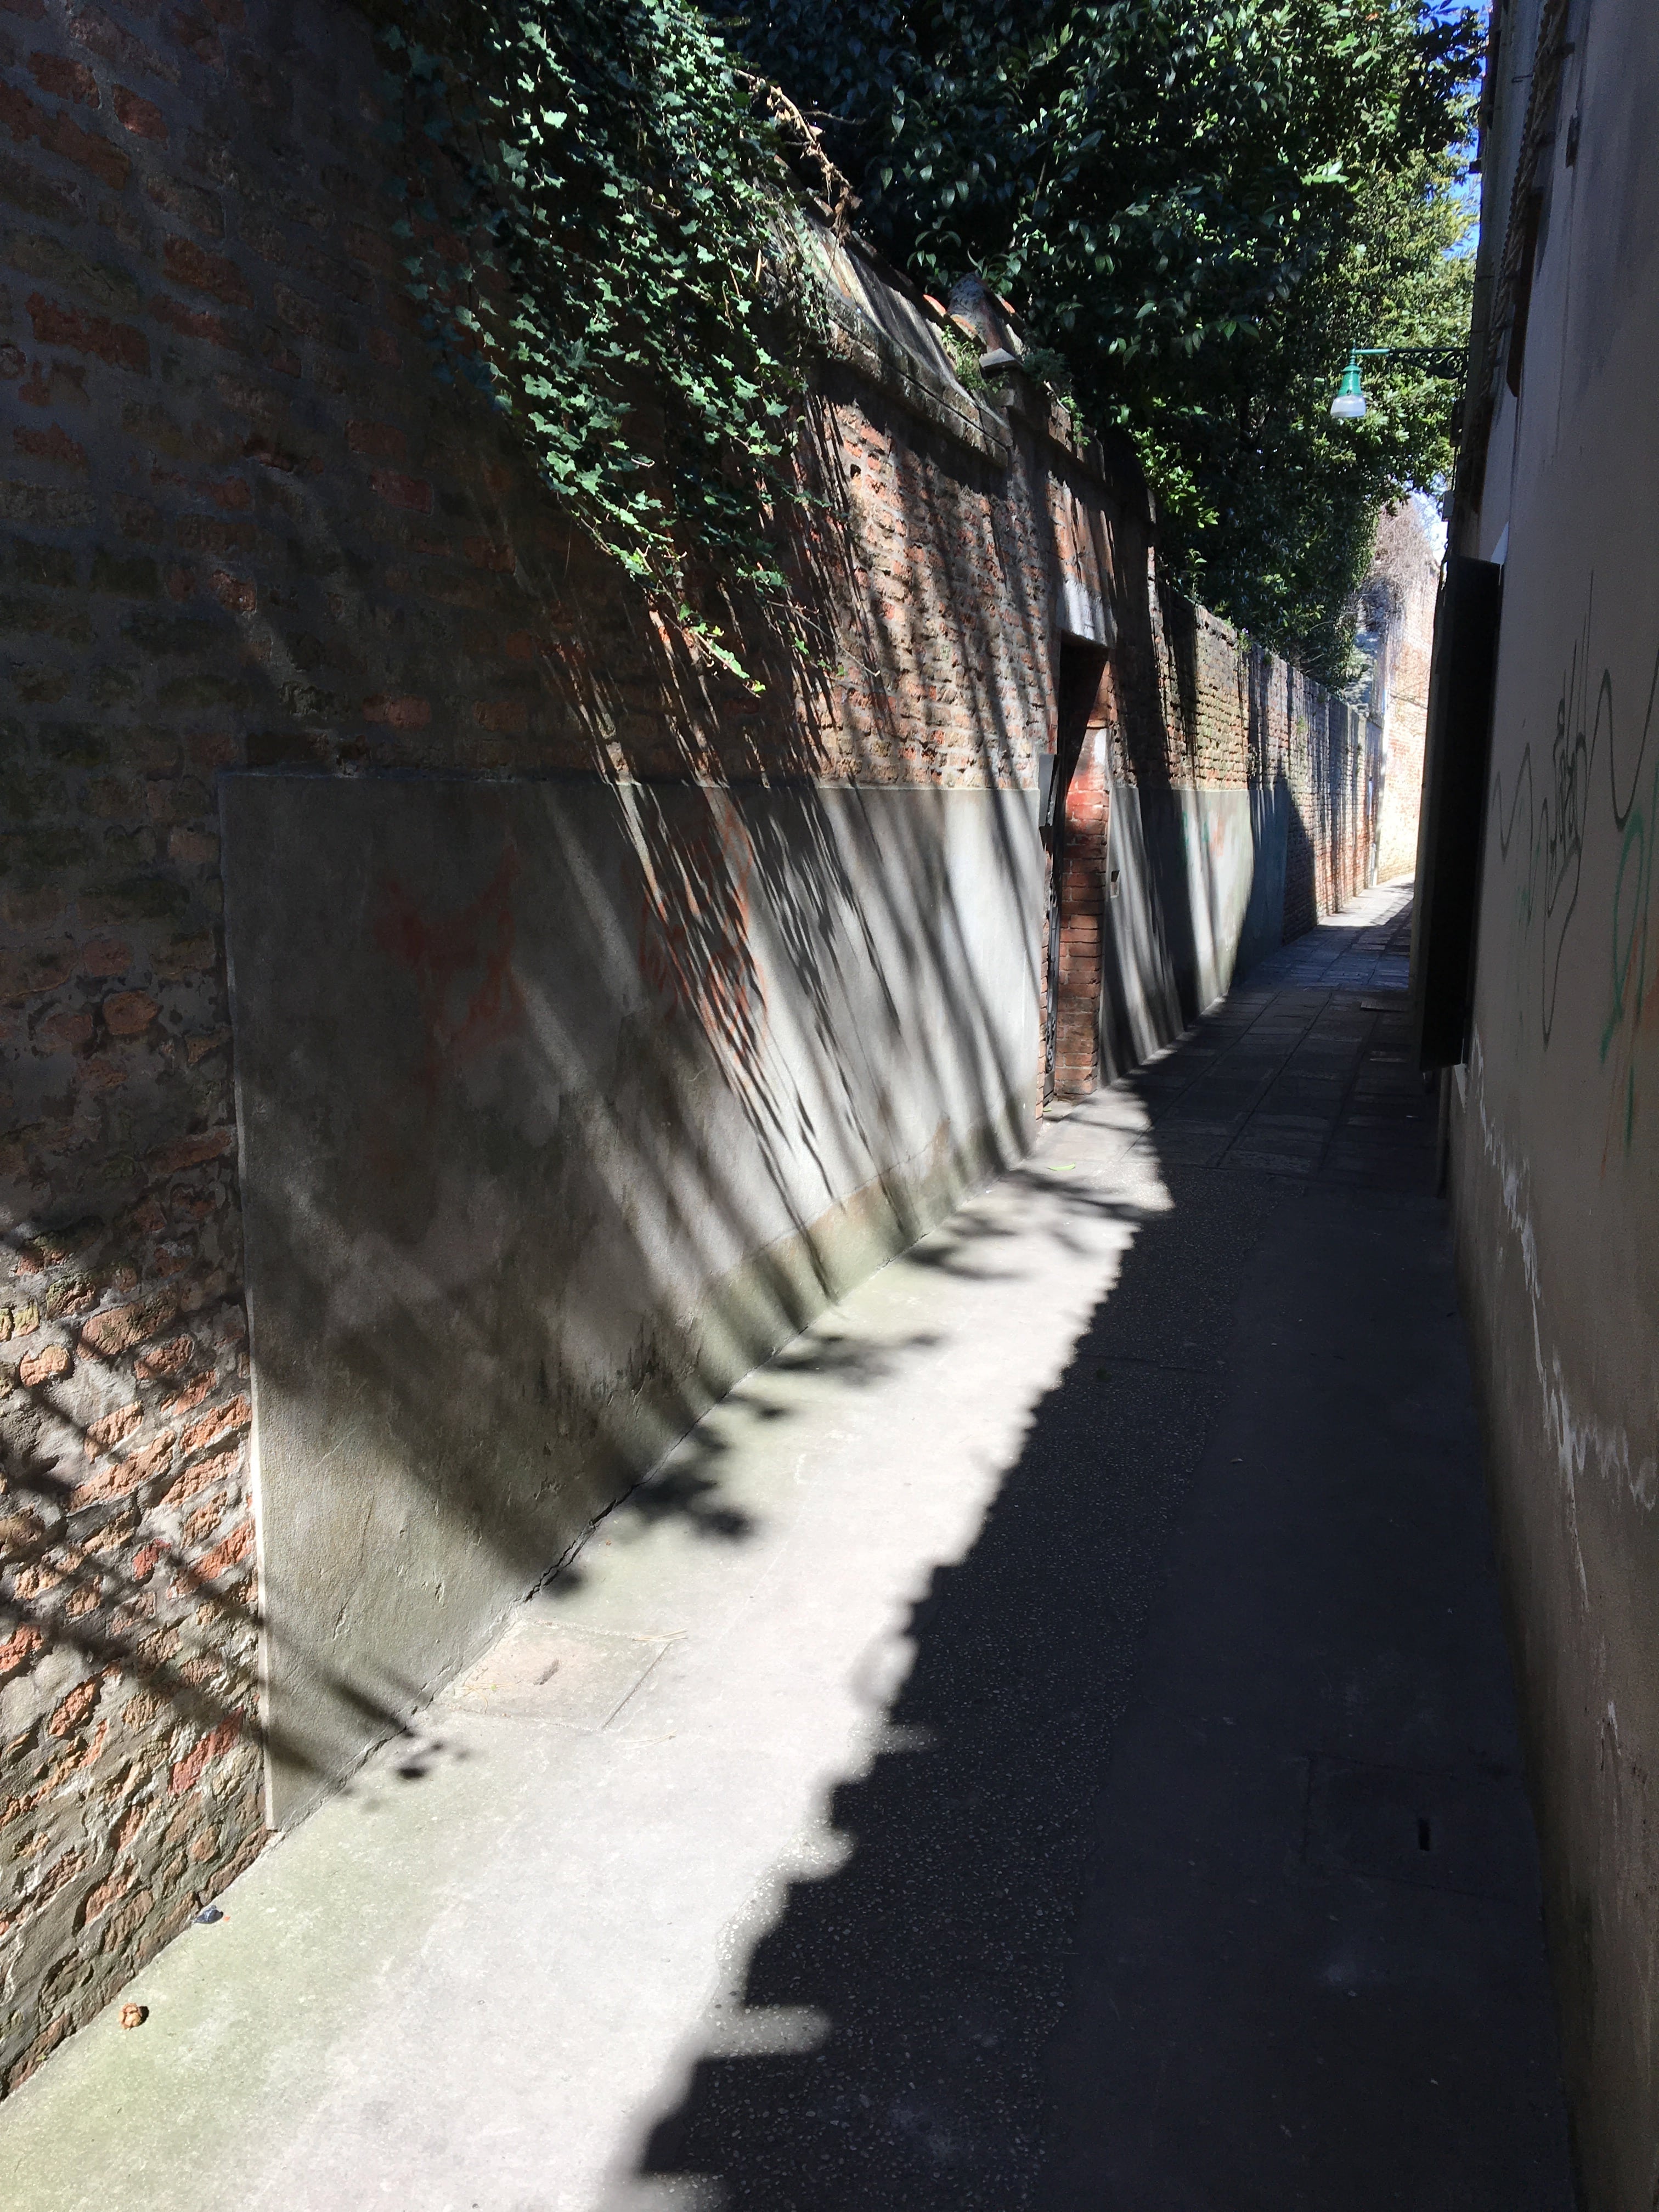 Passage d'une calle de la Giudecca.